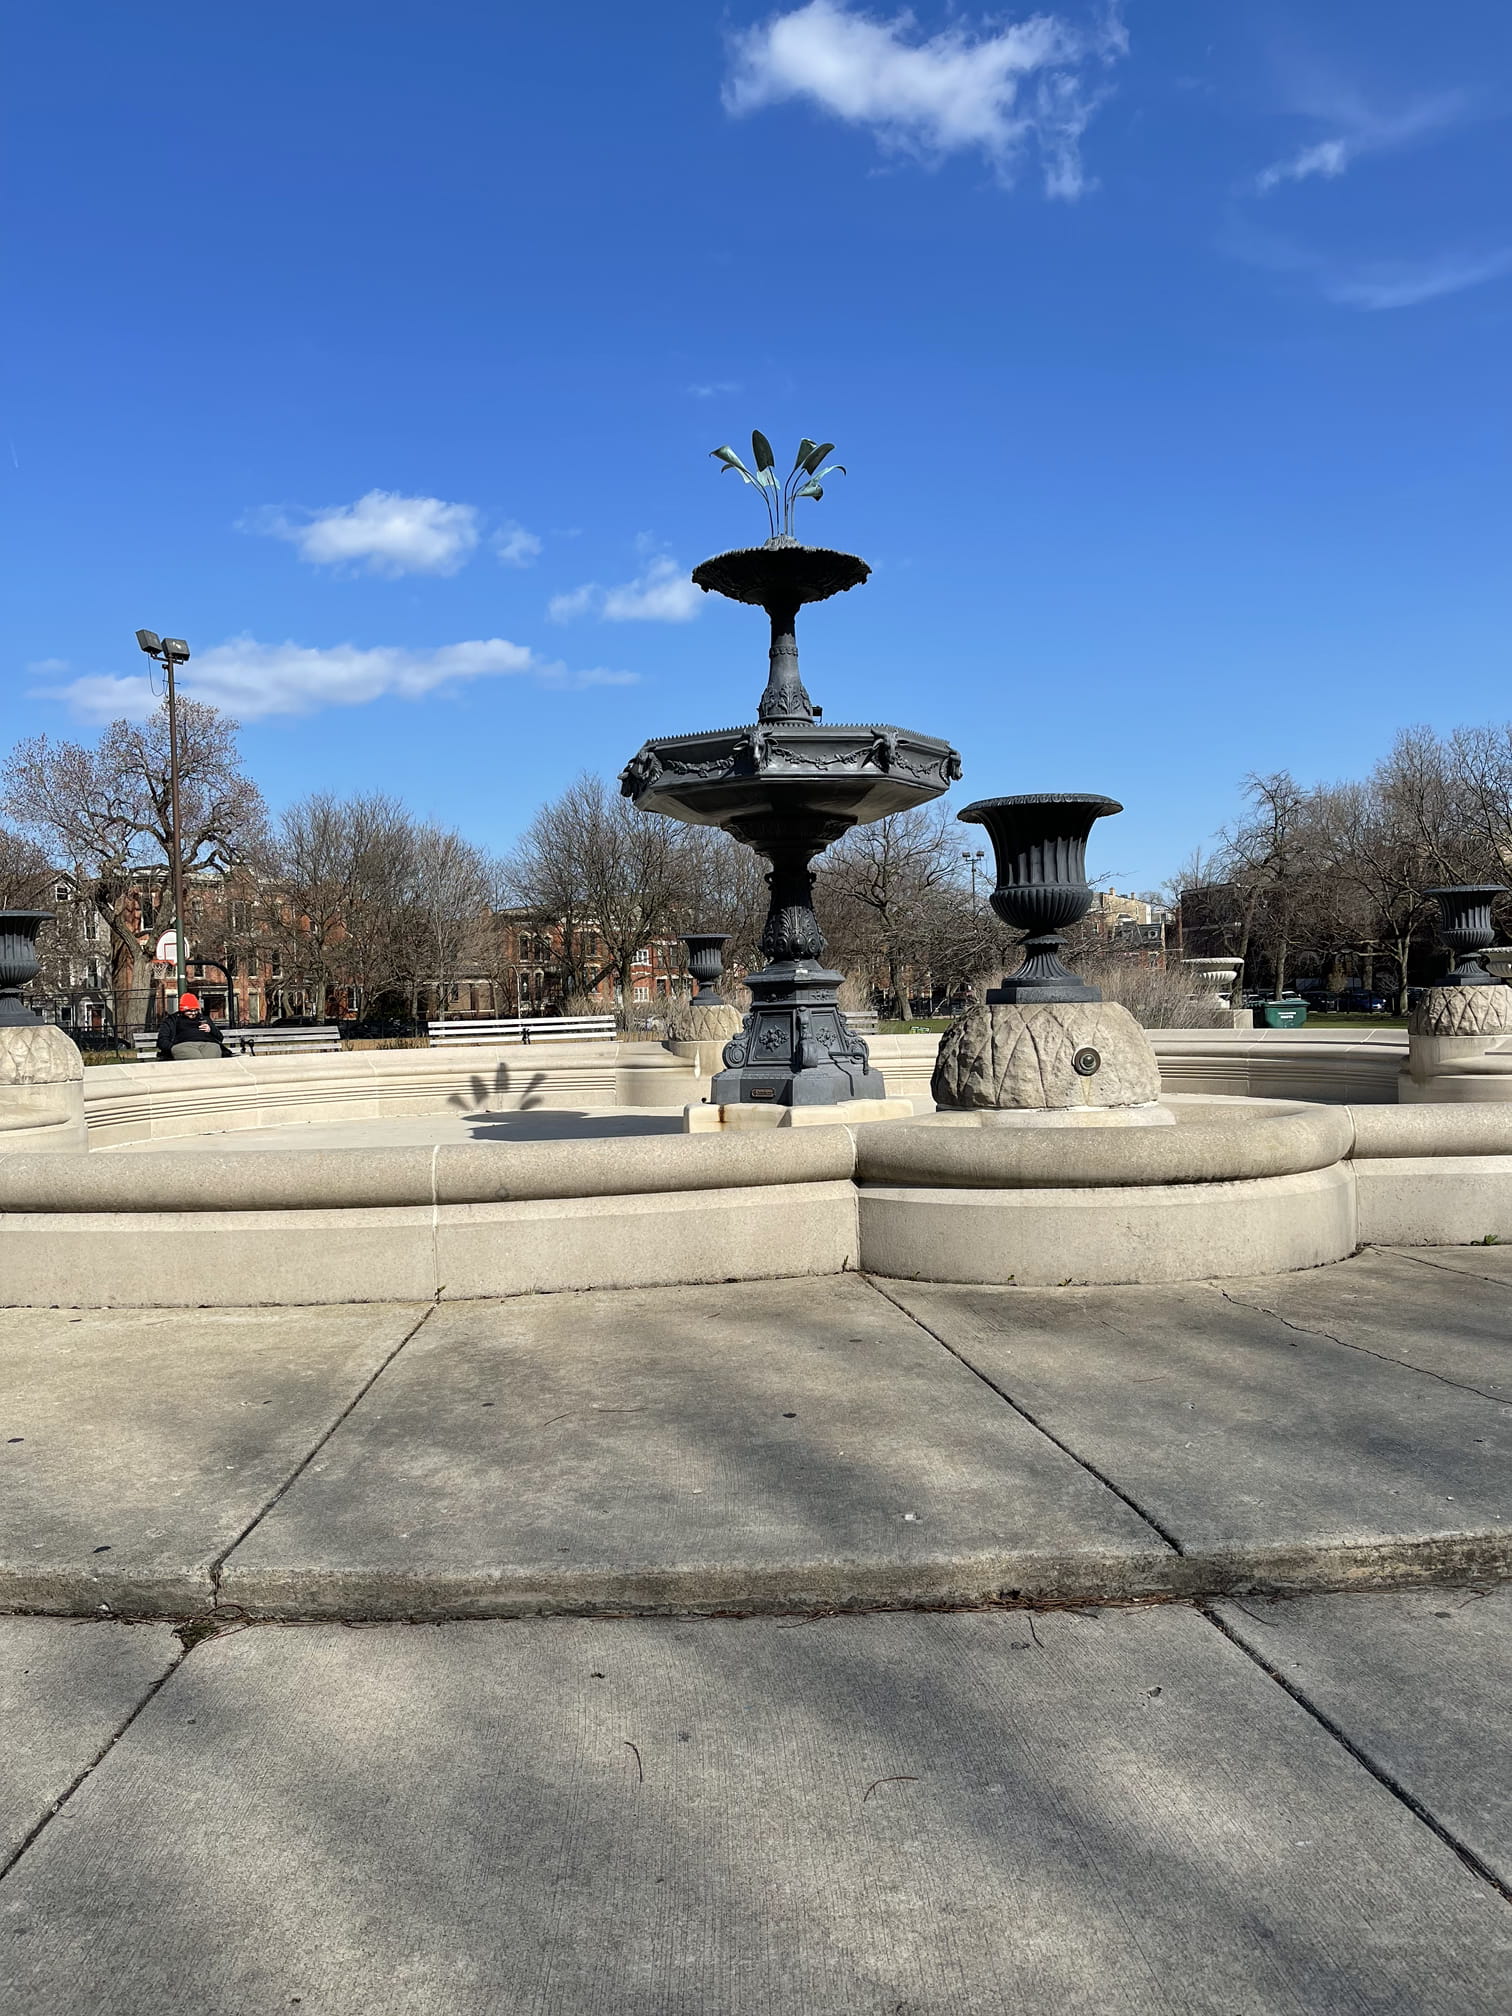 Wicker park fountain